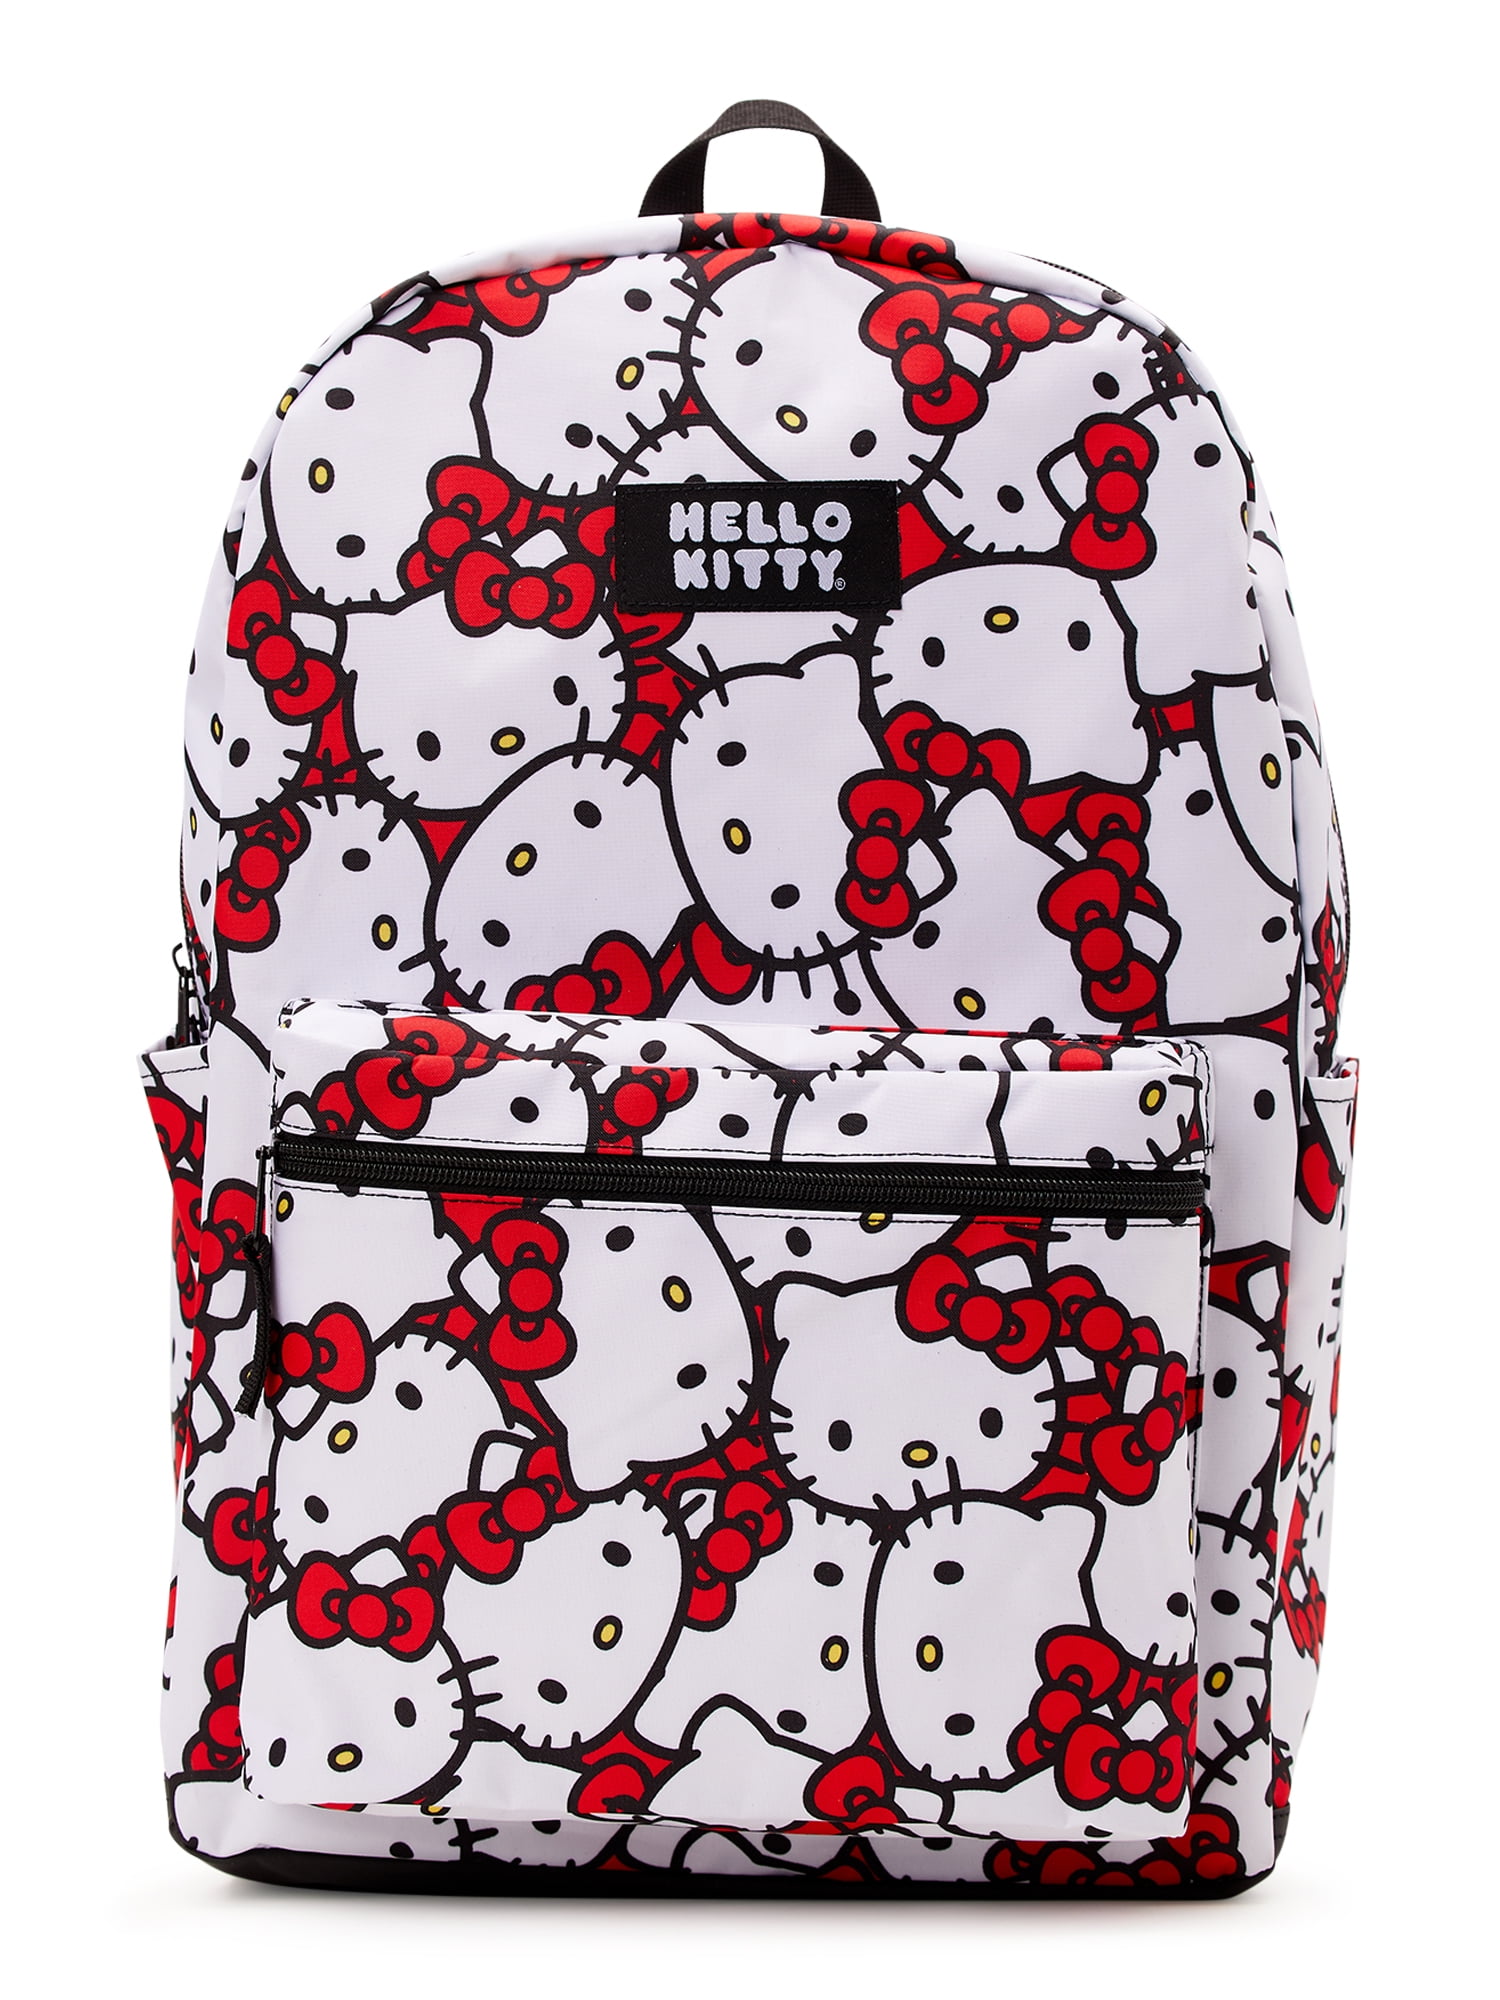 New Sanrio HELLO KITTY Pink Bag School Work Book Large Backpack